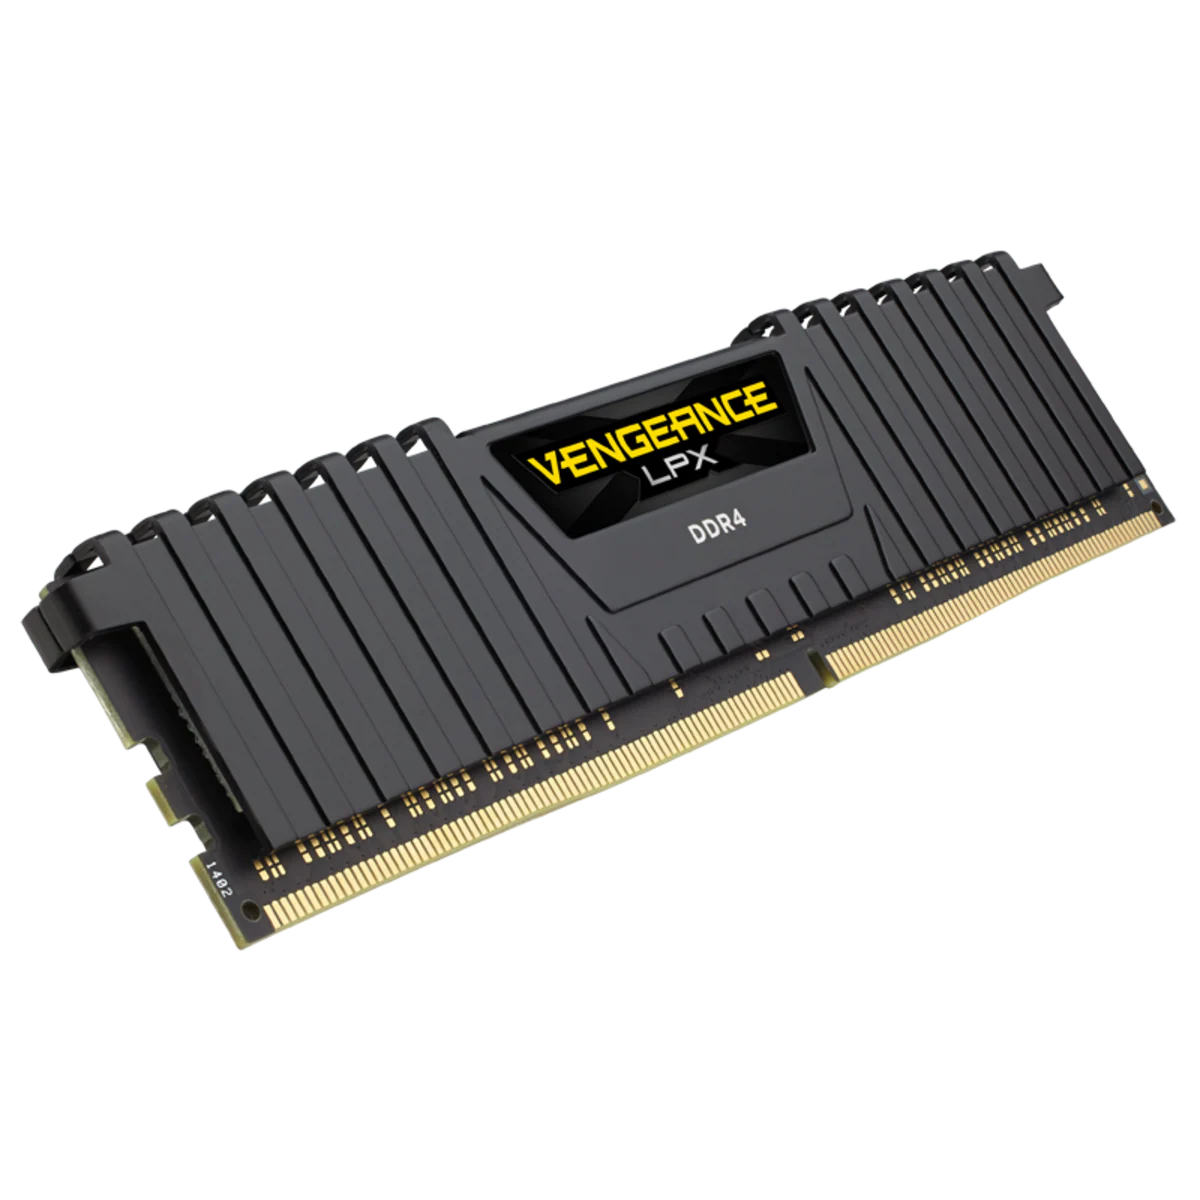 CORSAIR DDR4 8GB 2666MHz VengeLPX 8GB (1 x 8GB) - Black